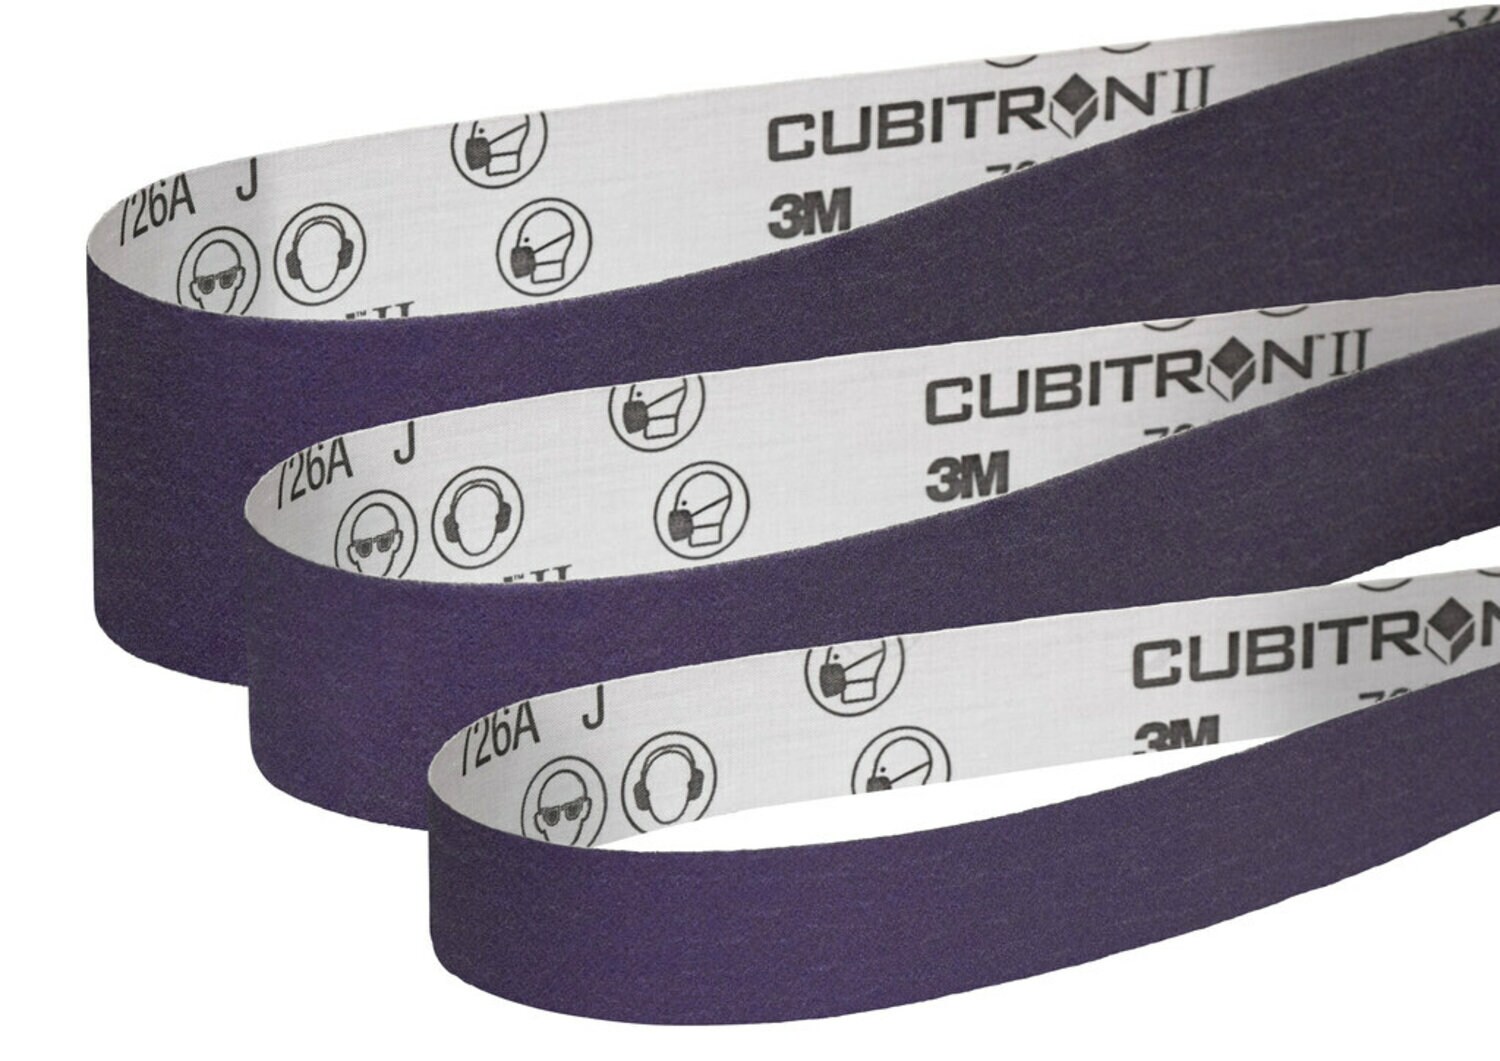 7100289609 - 3M Cubitron II Cloth Belt 726A, 120+ J-weight, Config